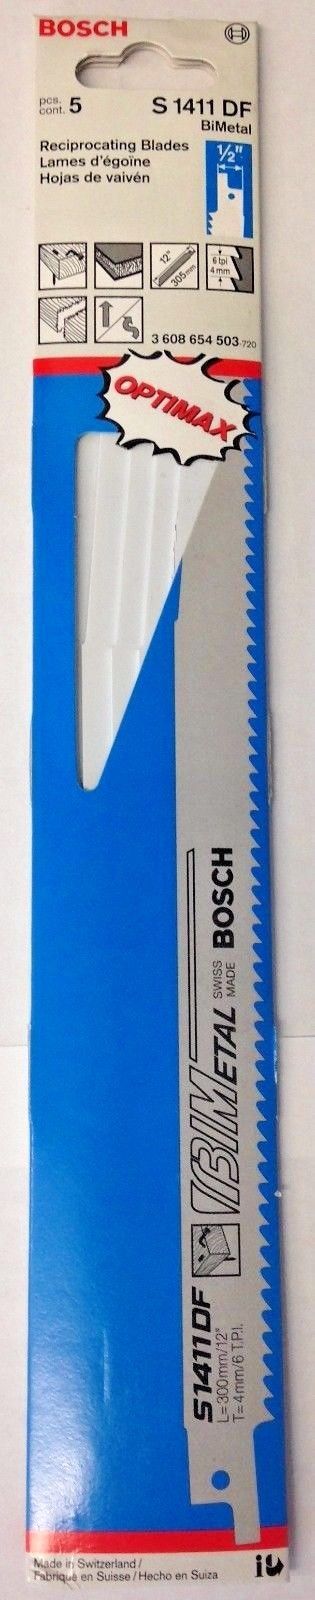 Bosch S1411DF 12" x 6 TPI Bi-Metal Reciprocating Saw Blades 5 Pack Switzerland